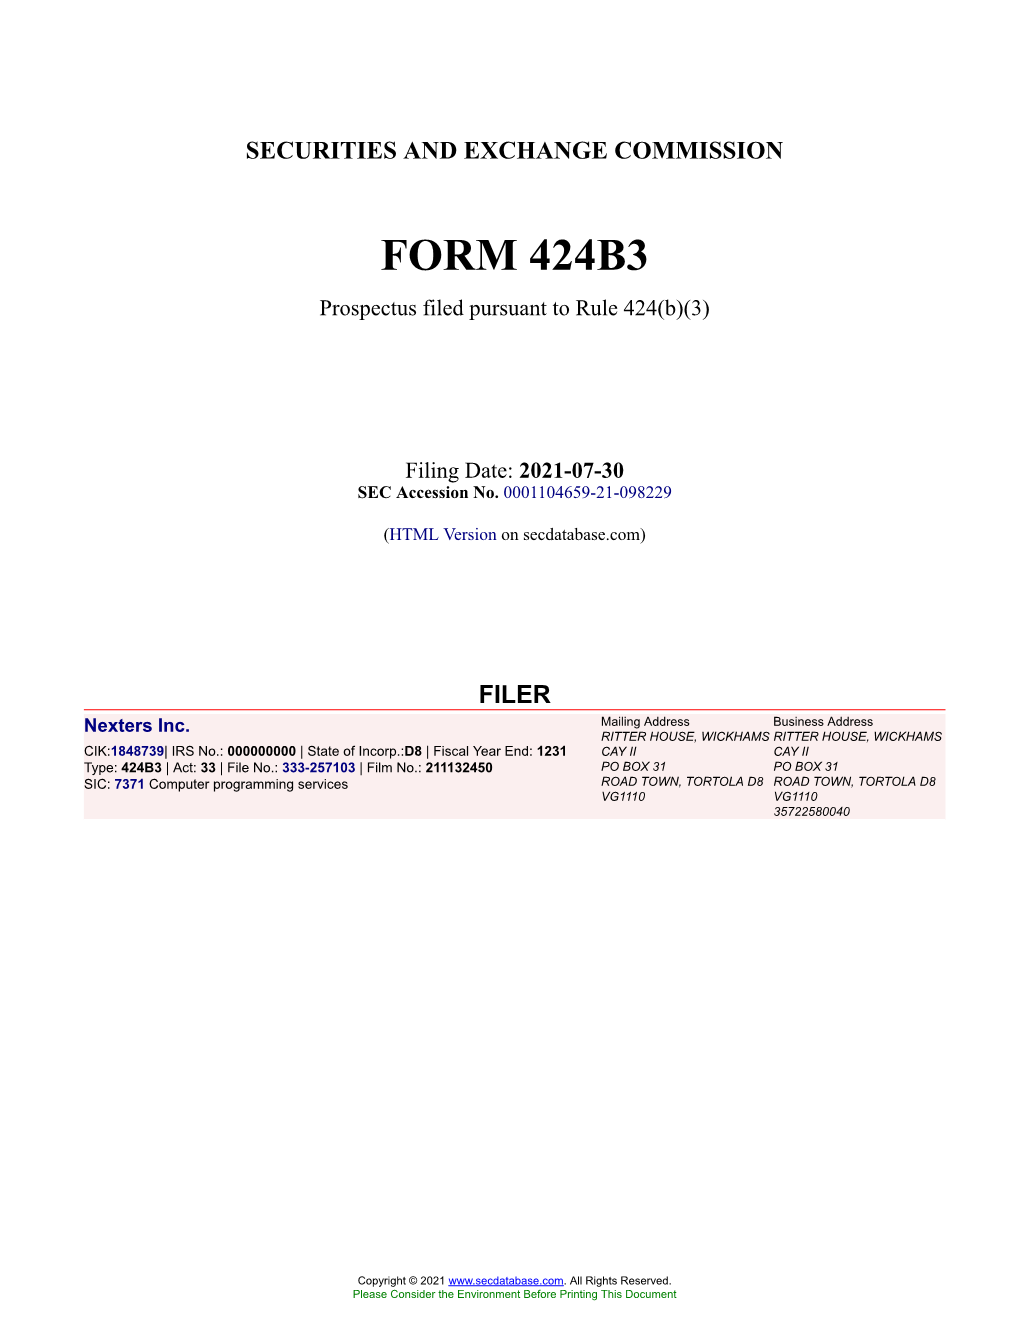 Nexters Inc. Form 424B3 Filed 2021-07-30